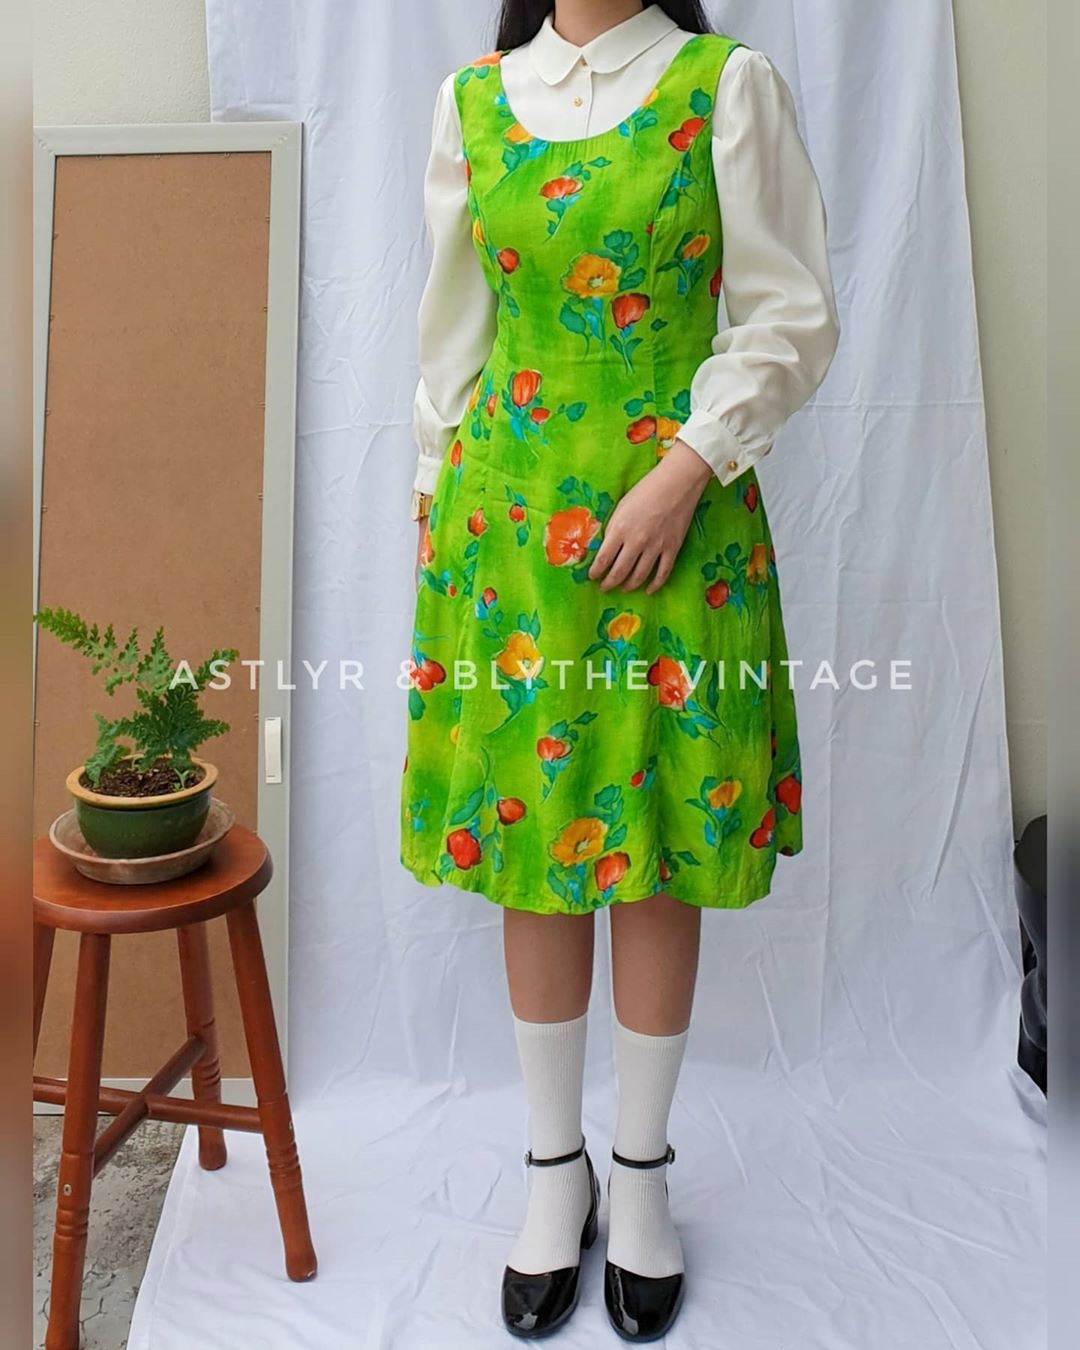 Instagram thrift stores - vintage green dress